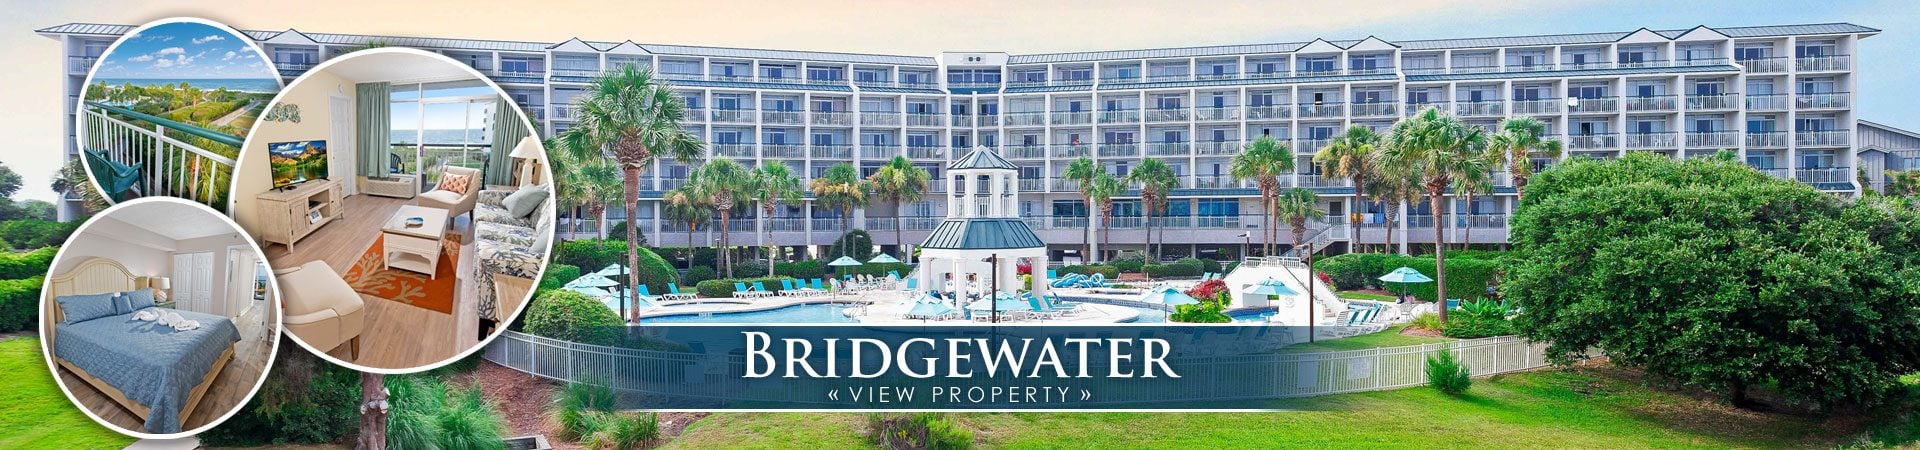 Bridgewater View Property 1920x450 1 2 